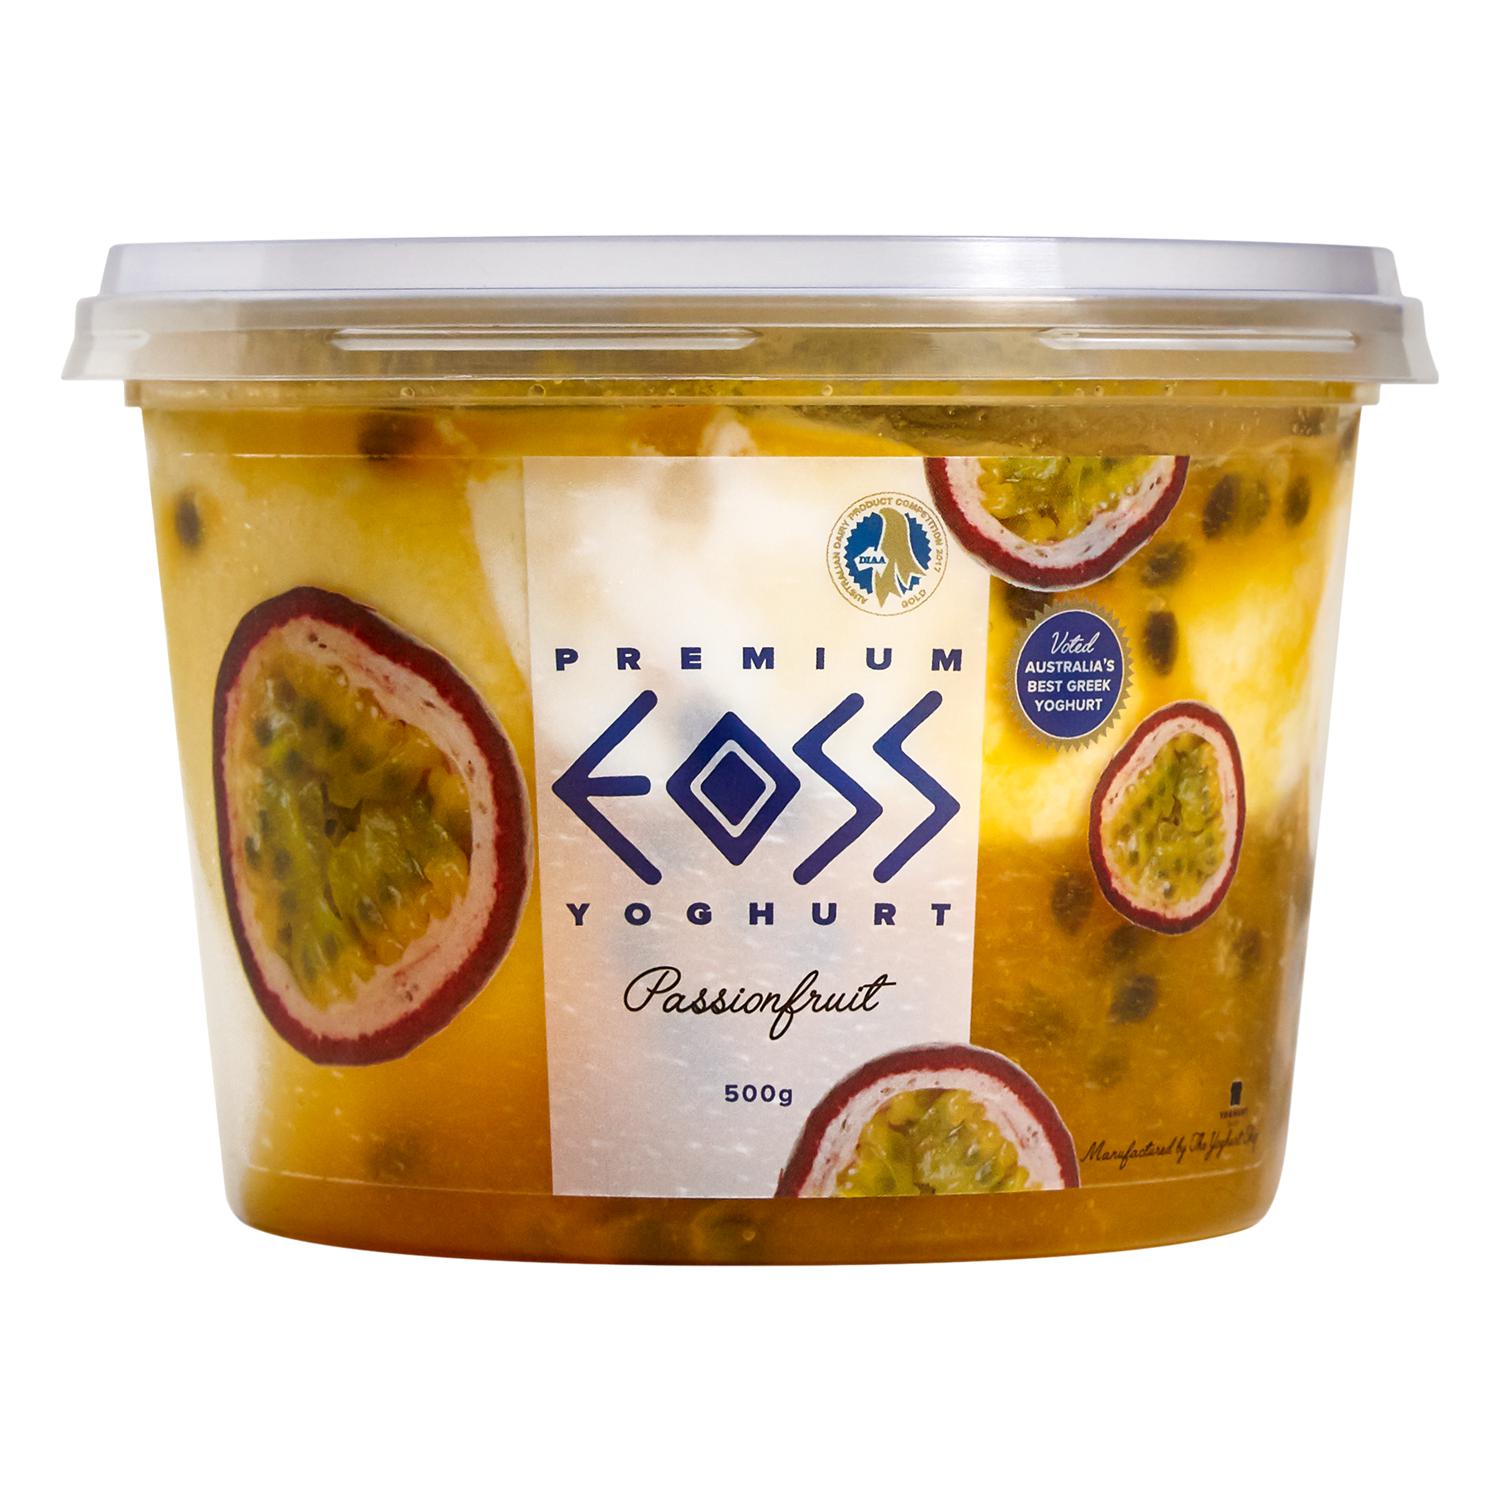 EOSS Yoghurt Passionfruit Tub 500g